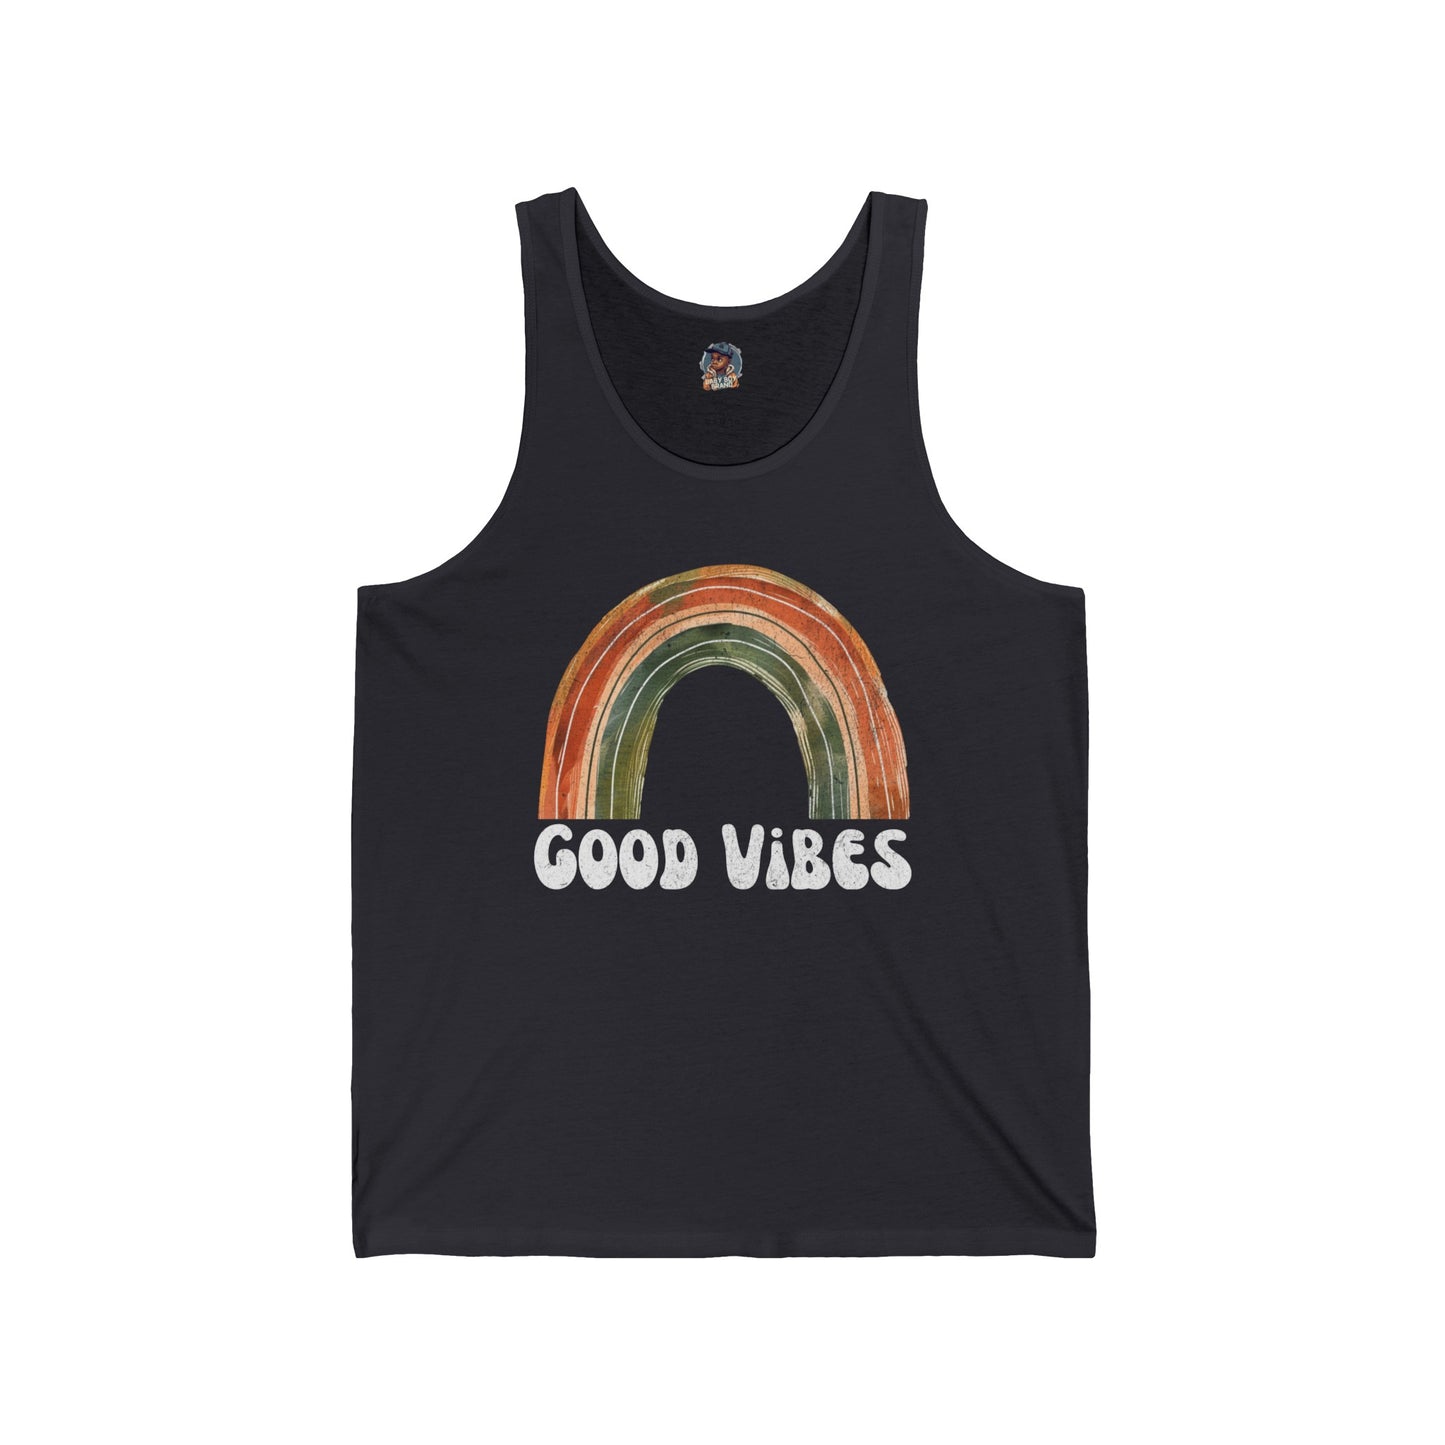 "Good Vibes"